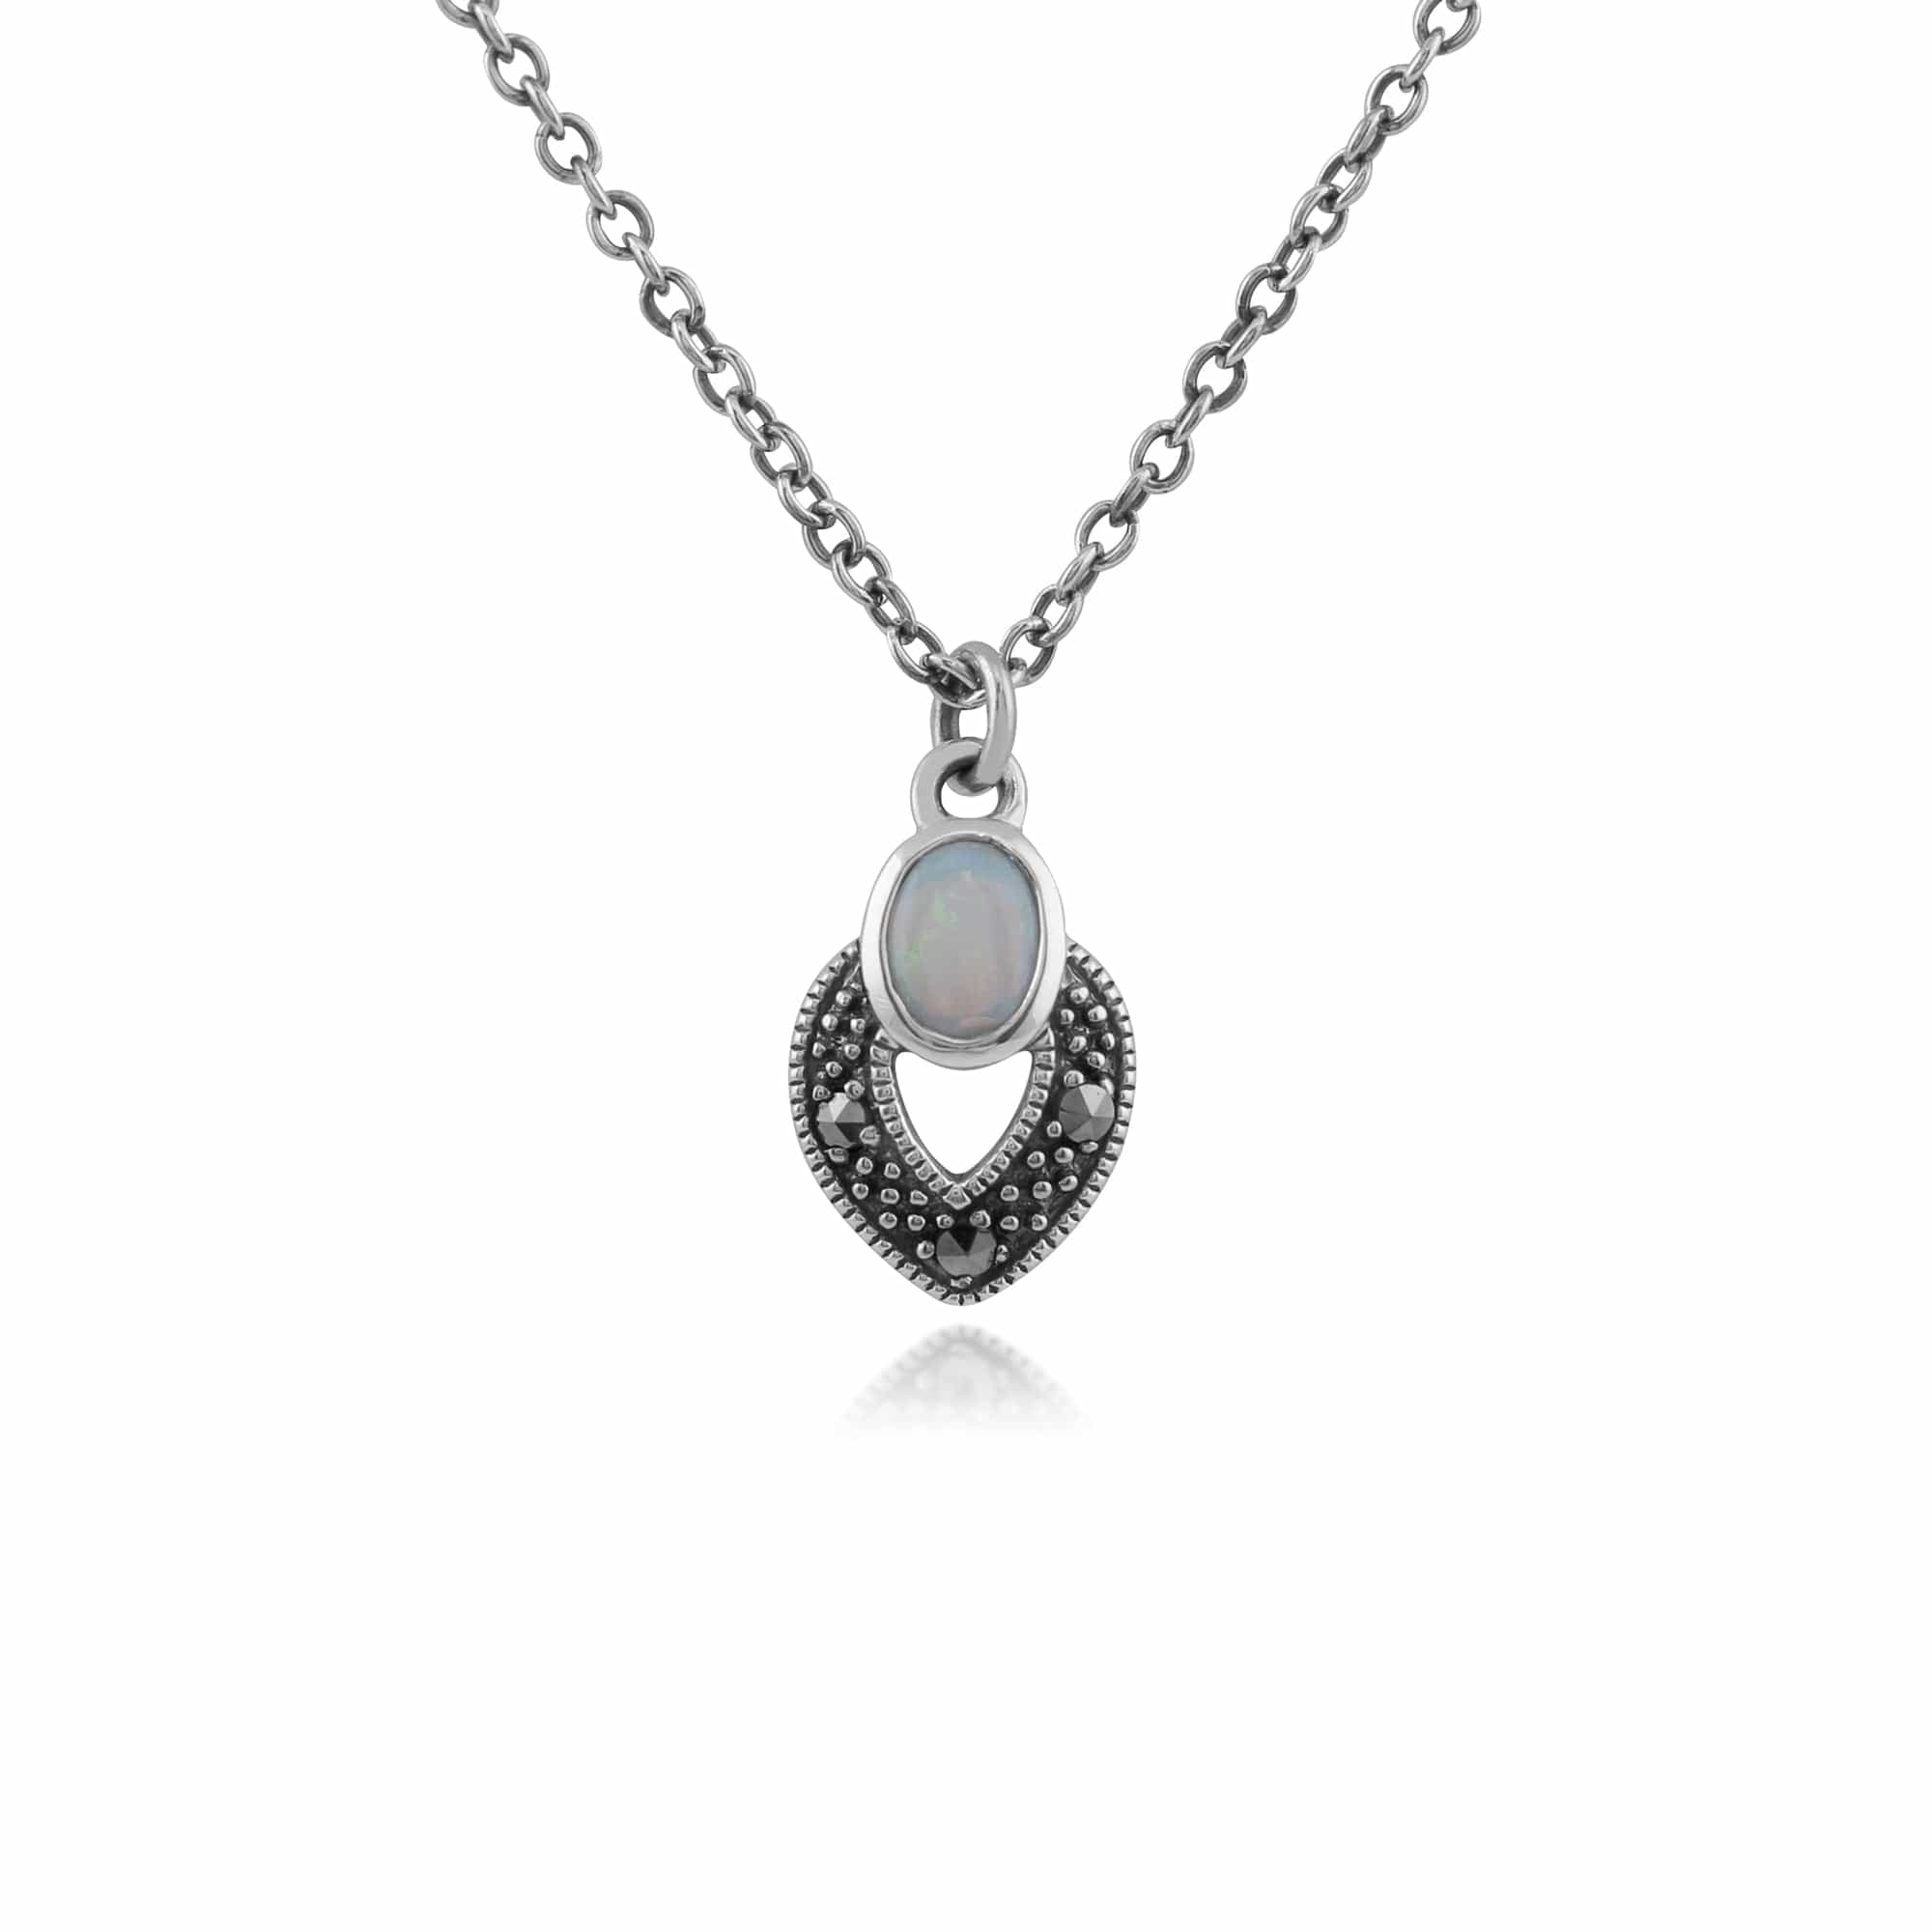 Art Deco Style Oval Opal & Marcasite Necklace in 925 Sterling Silver - Gemondo